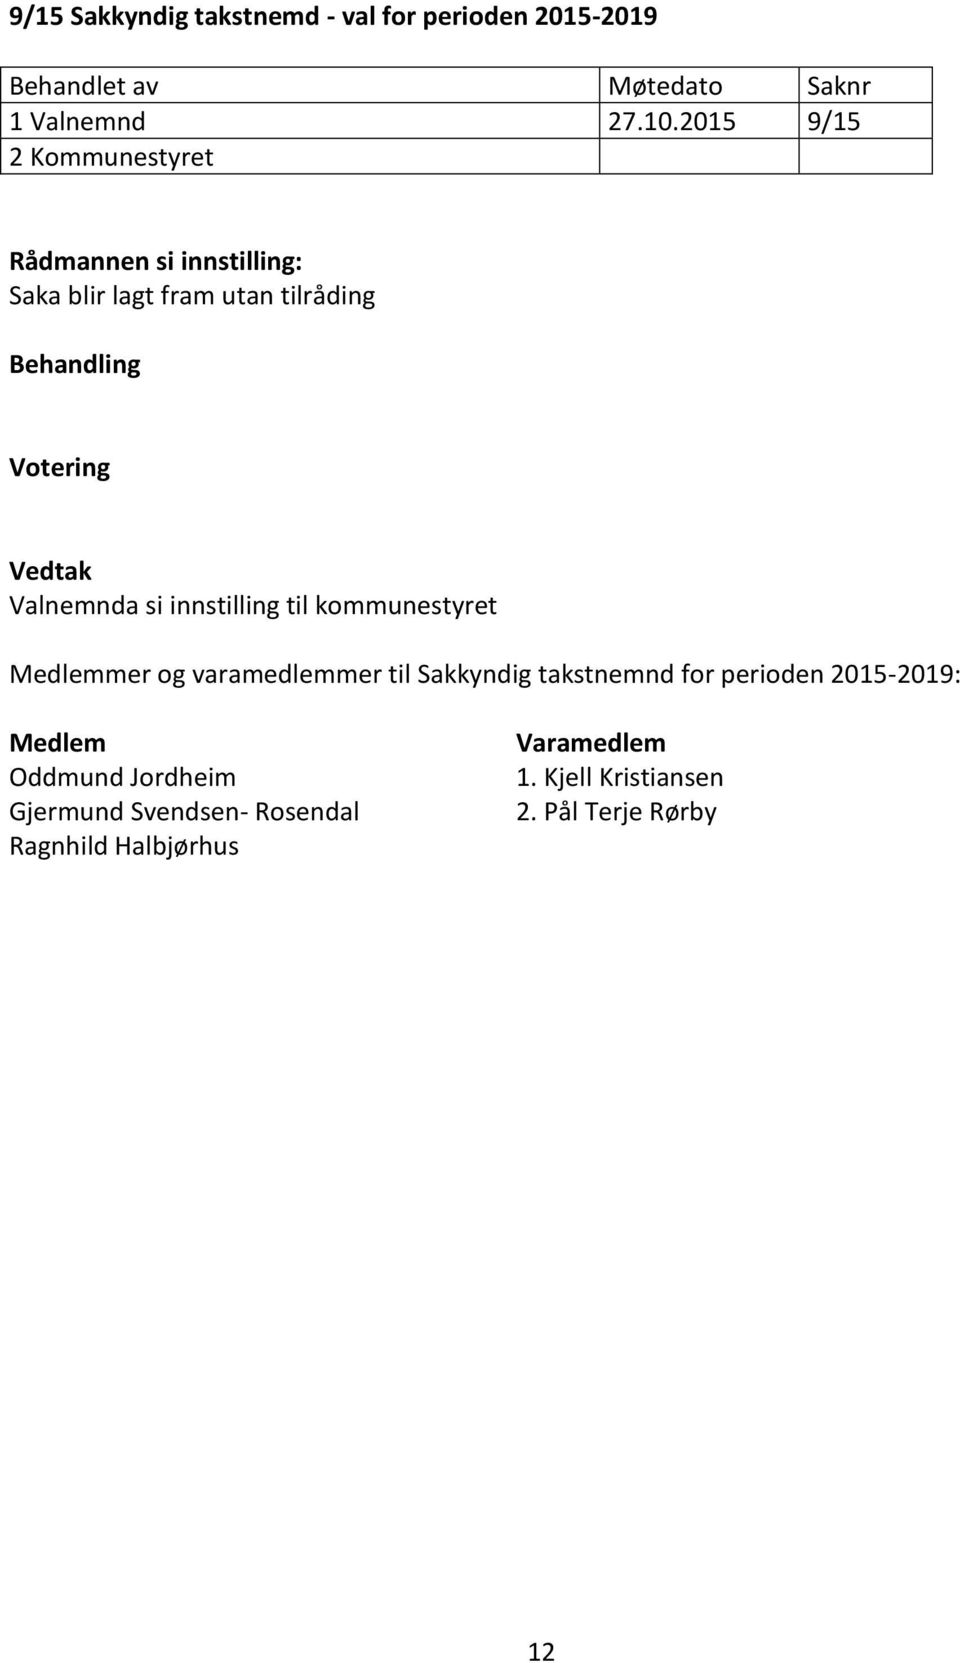 Sakkyndig takstnemnd for perioden 2015-2019: Medlem Oddmund Jordheim Gjermund